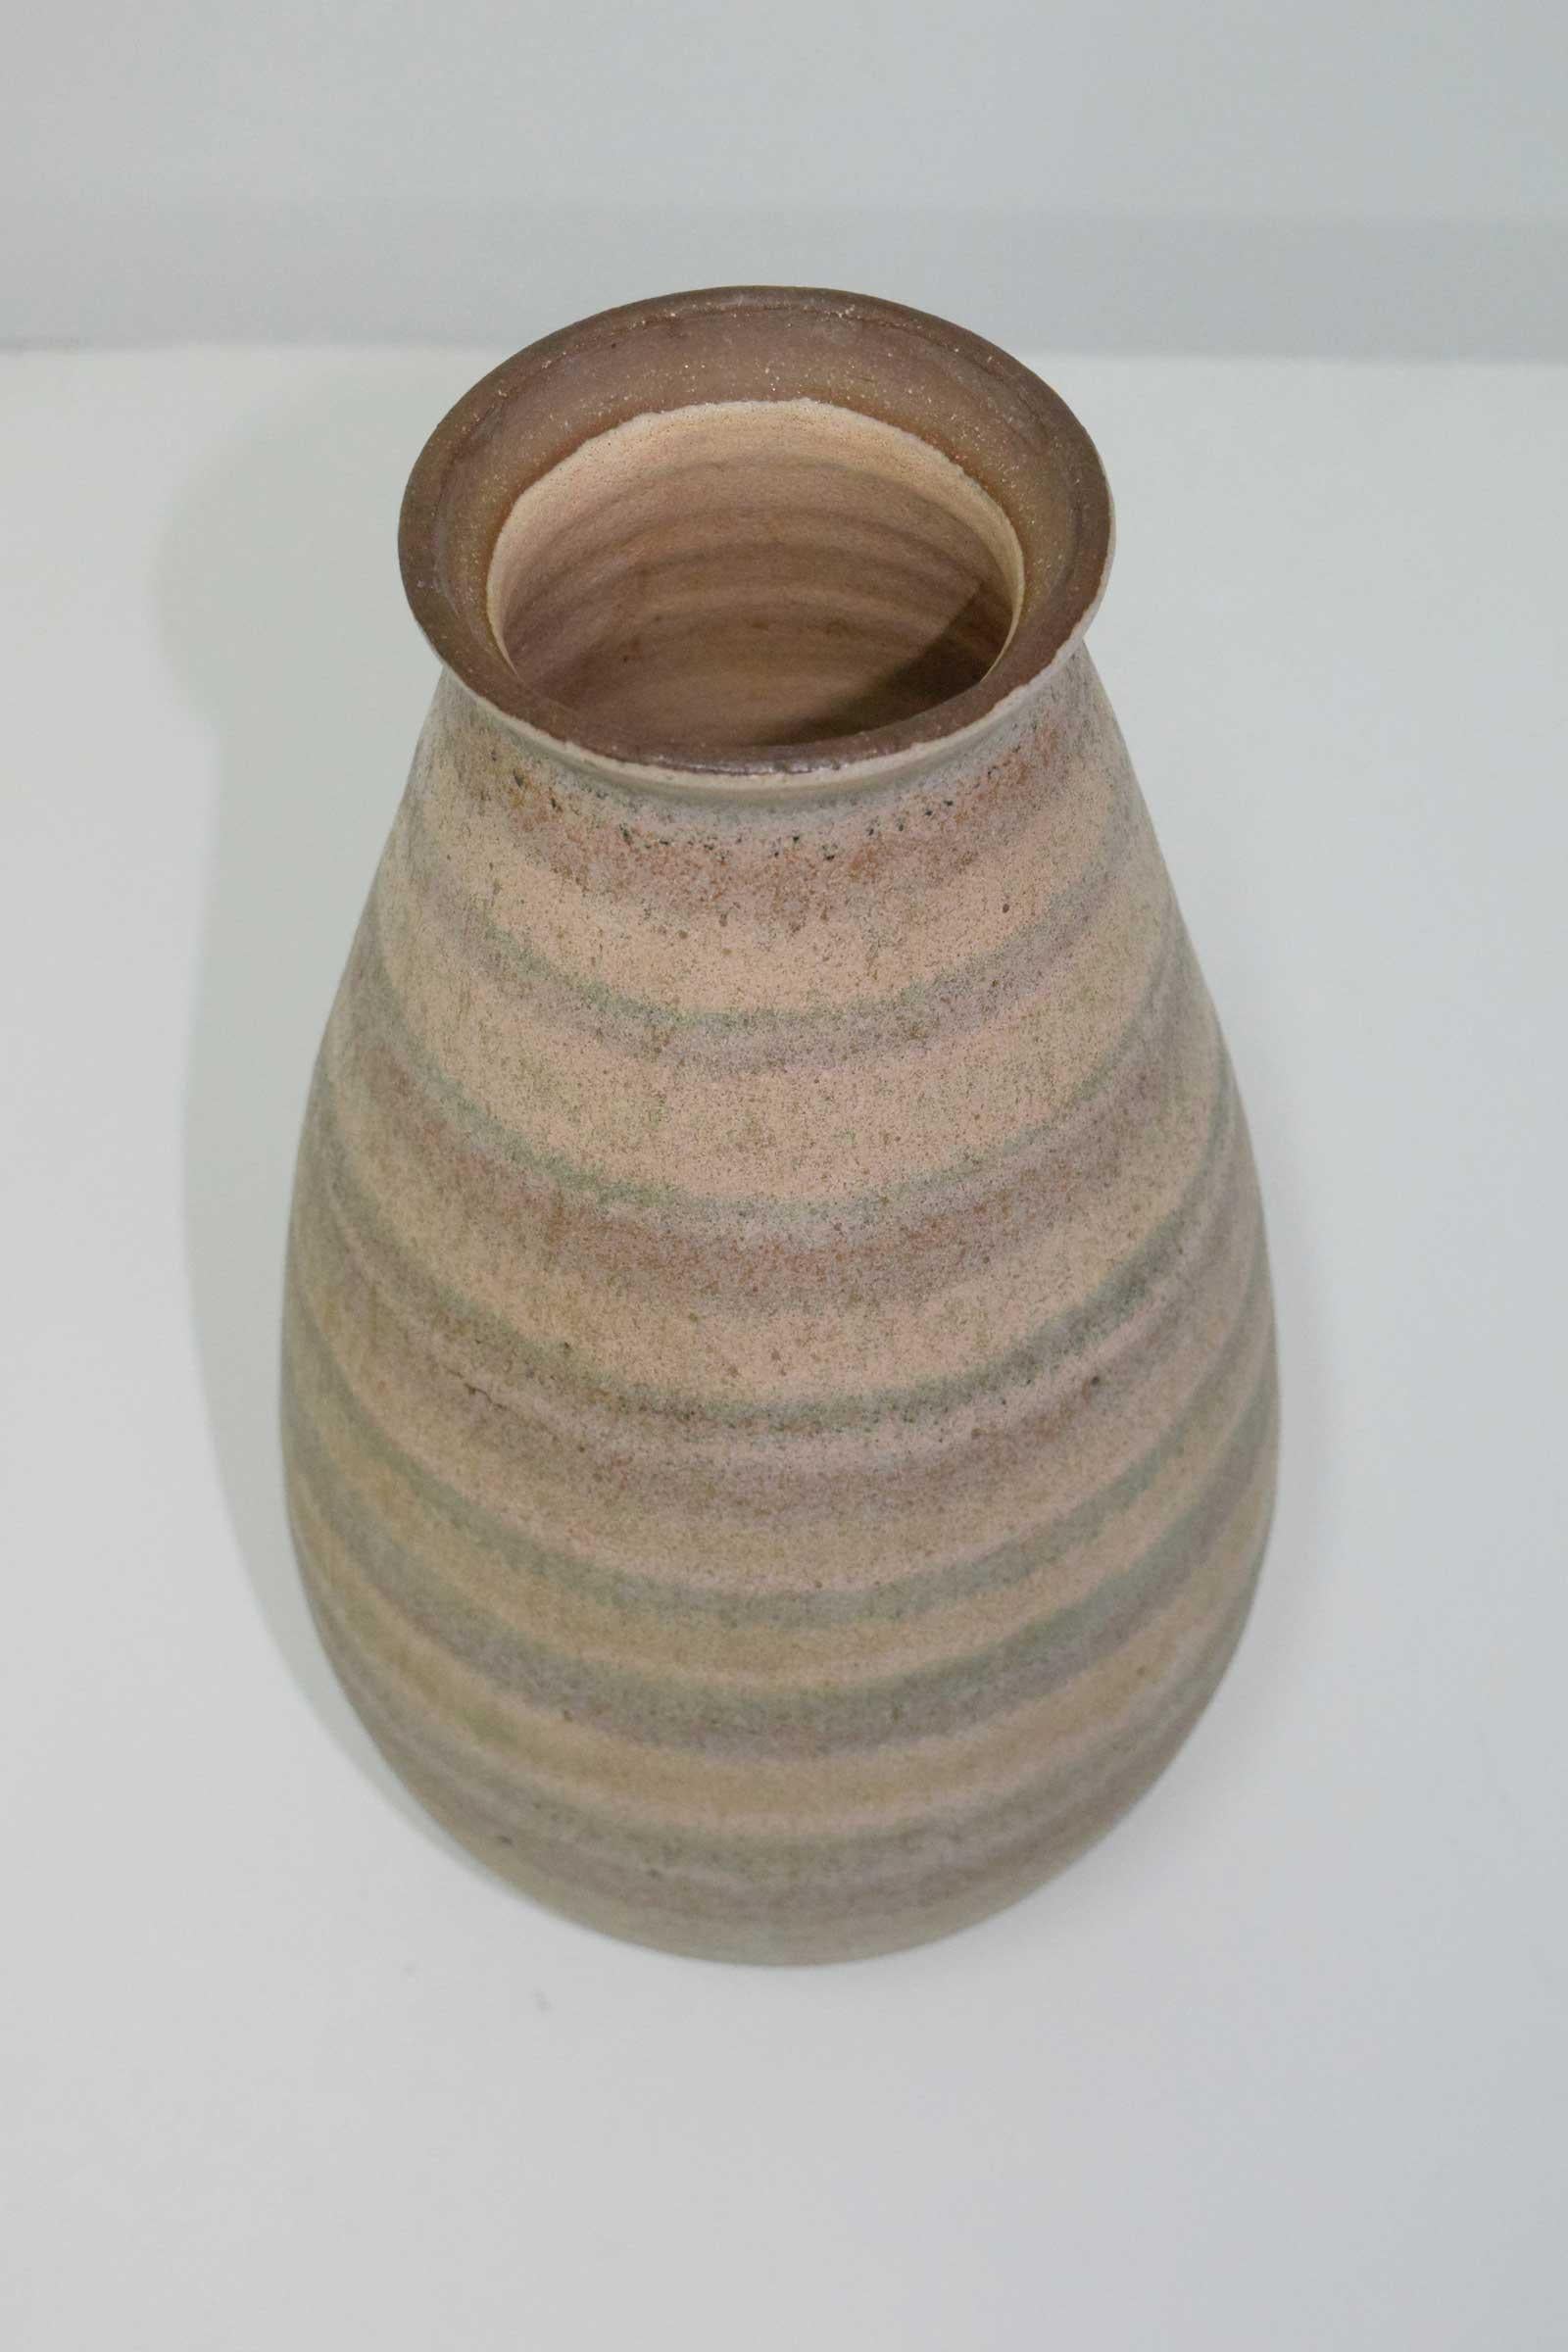 North American Clyde Burt Ceramic Vase with Lid